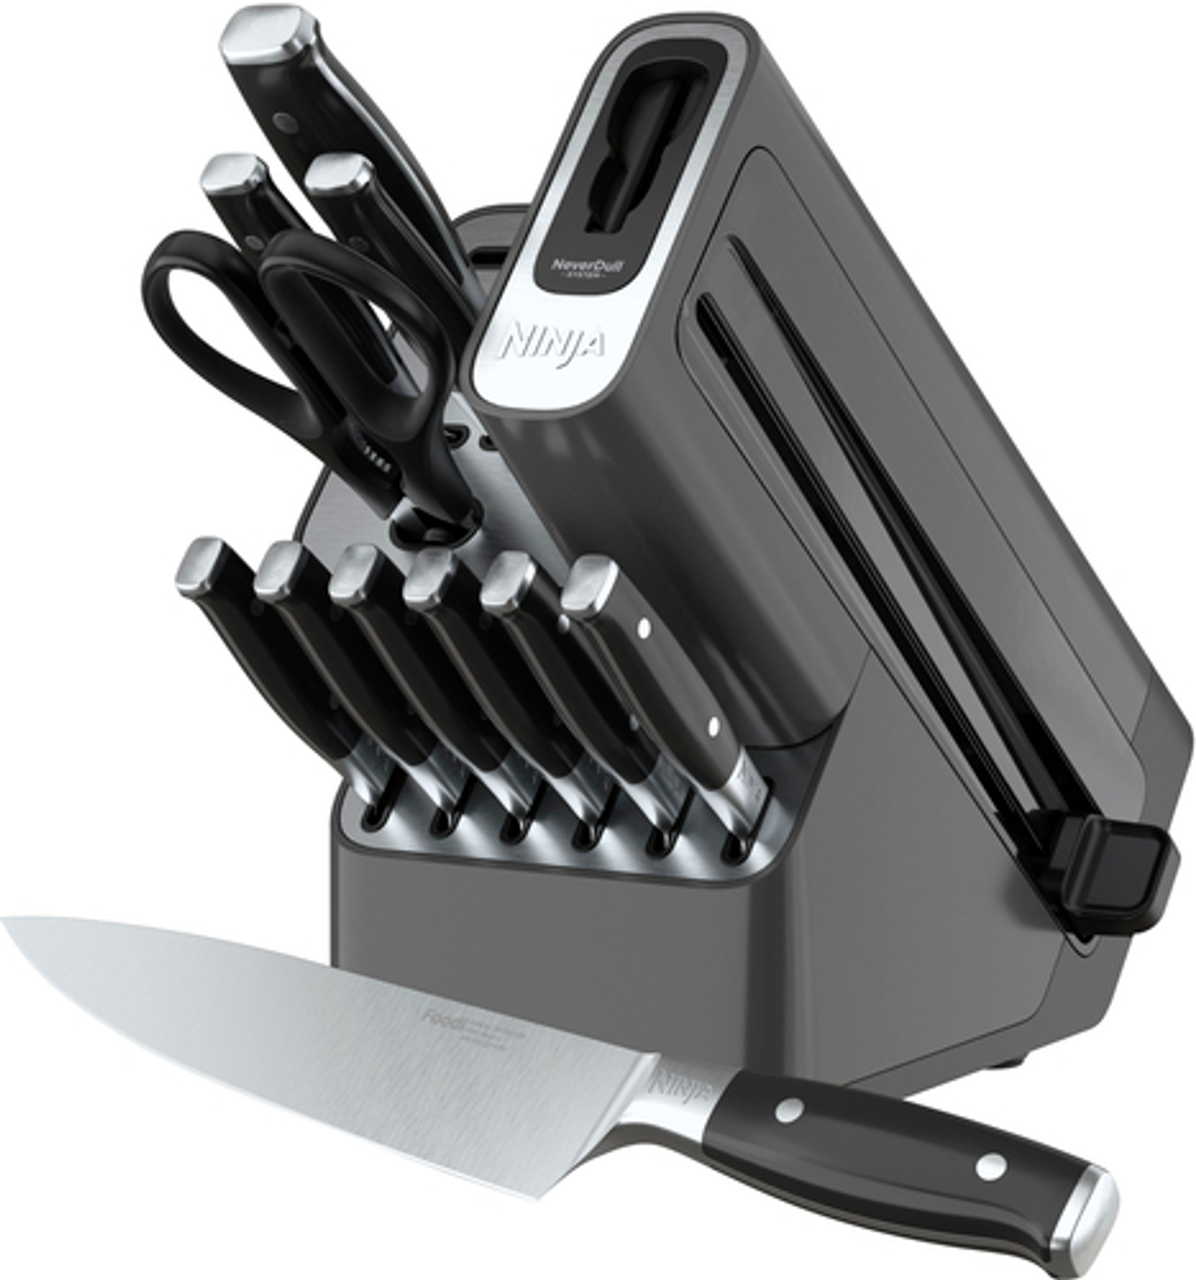 Ninja - Foodi NeverDull Premium 12-Piece Knife System with Built-in Sharpener - Black & Silver